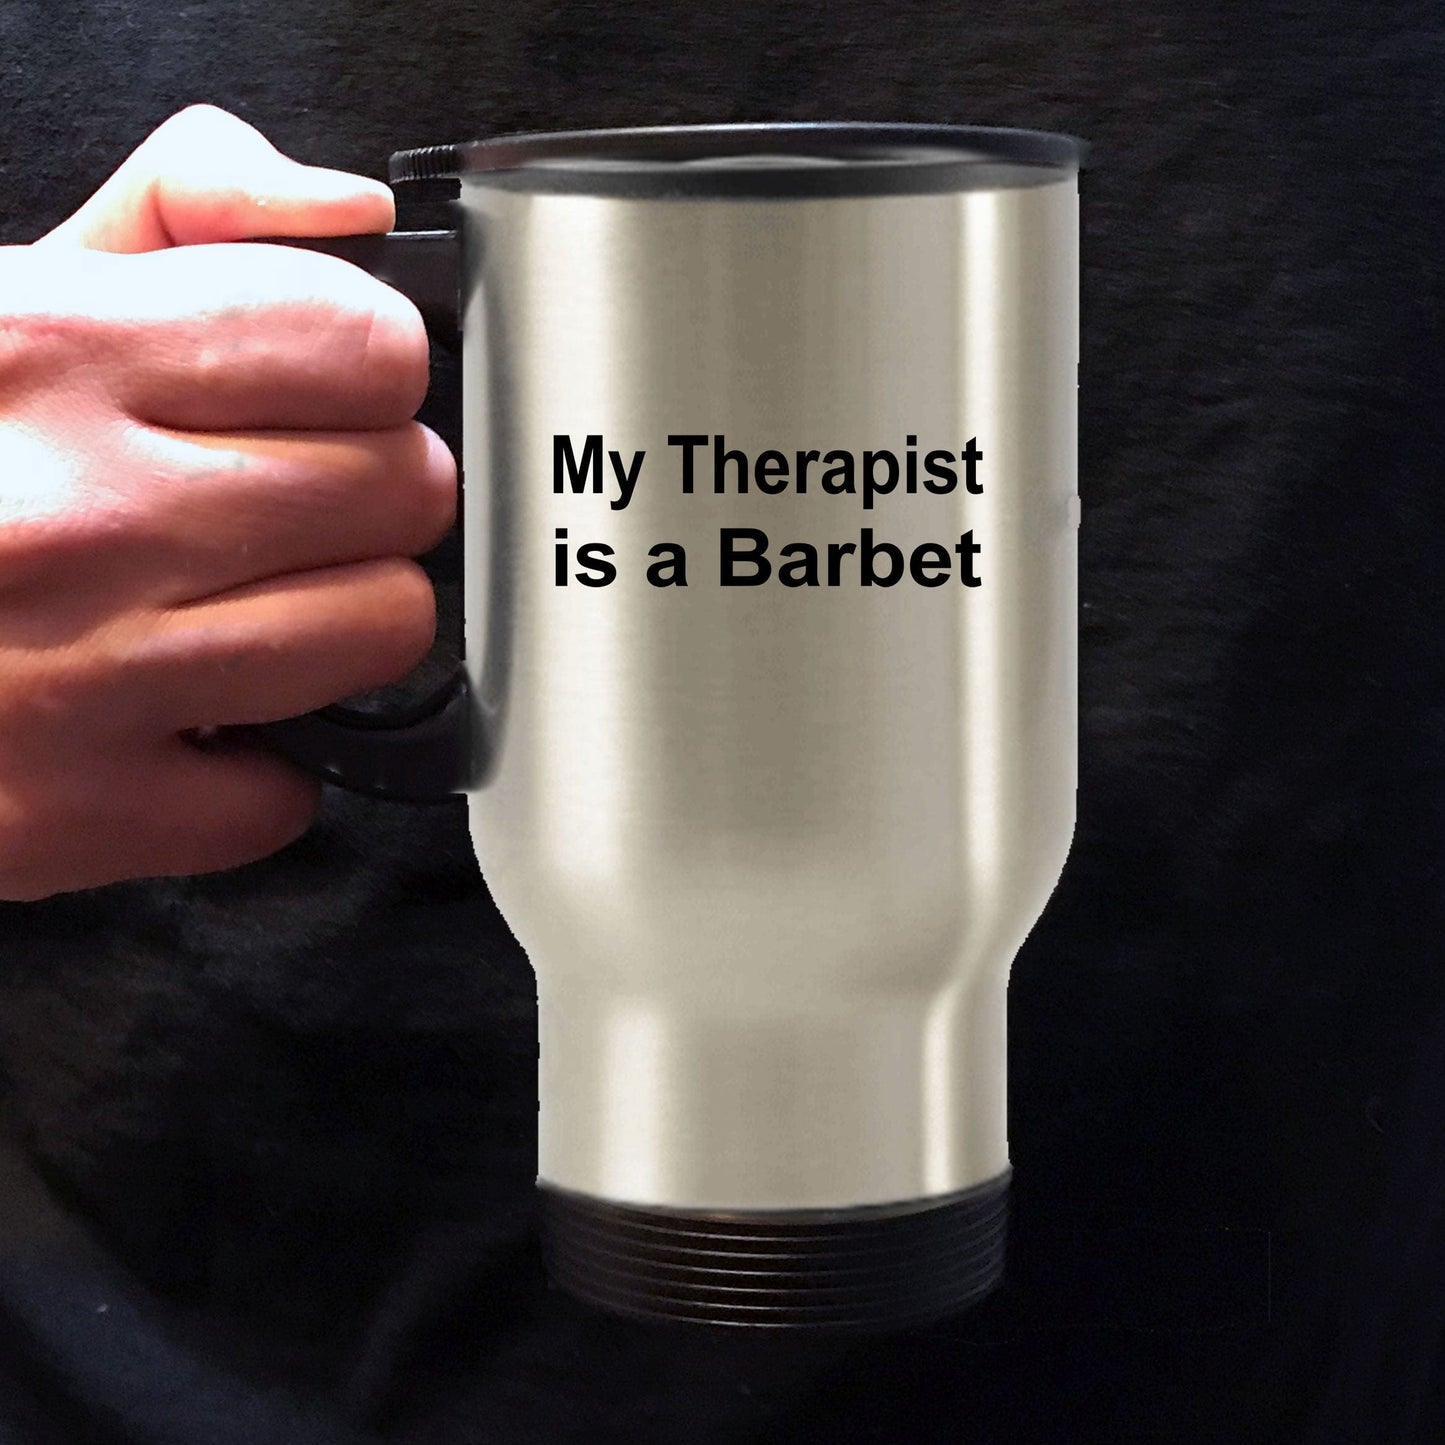 Barbet Dog Therapist Travel Coffee Mug